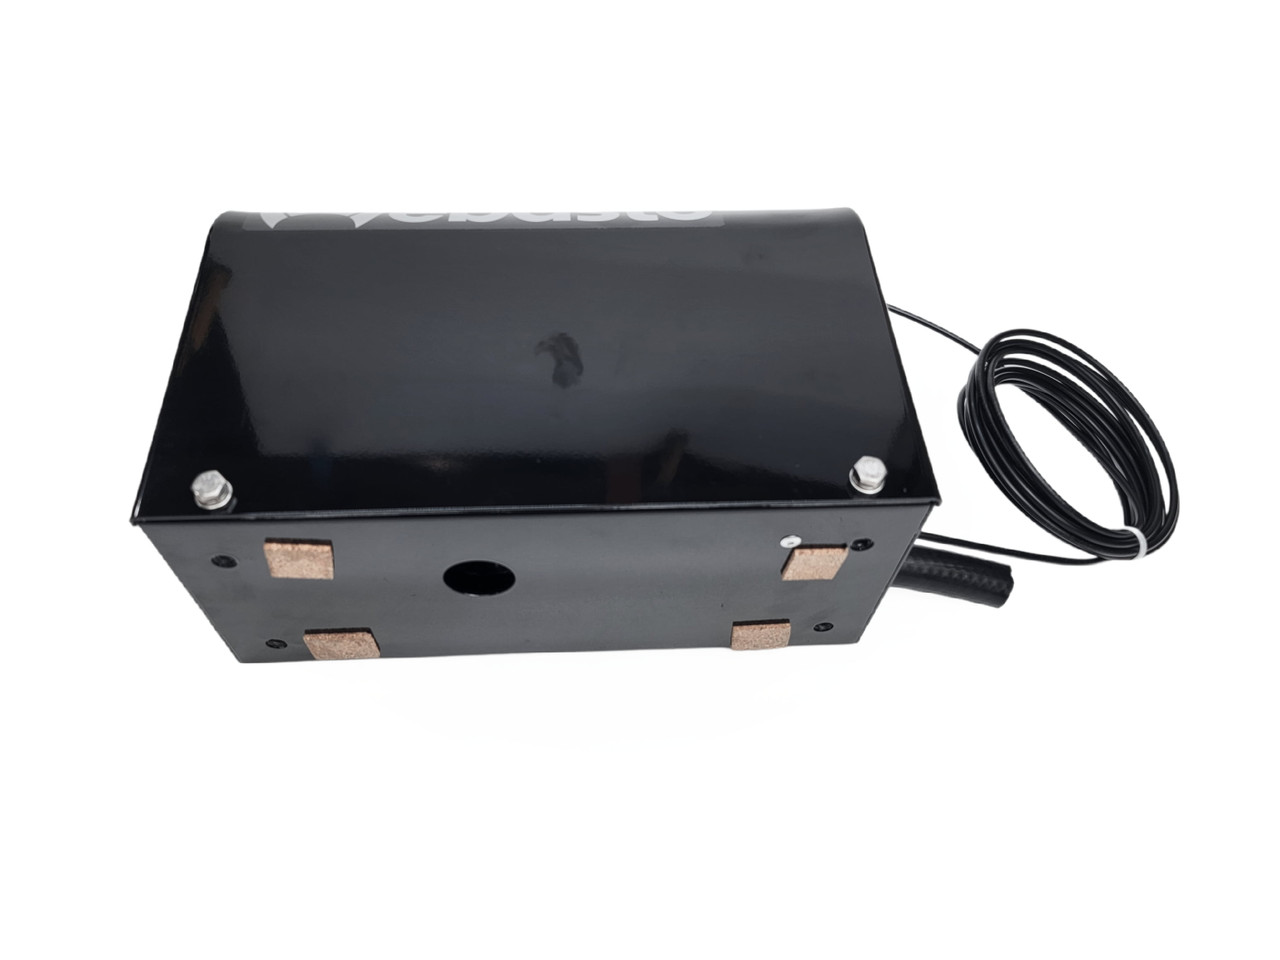 Webasto Thermo Pro 90 12v Coolant Heater Enclosure Box Kit